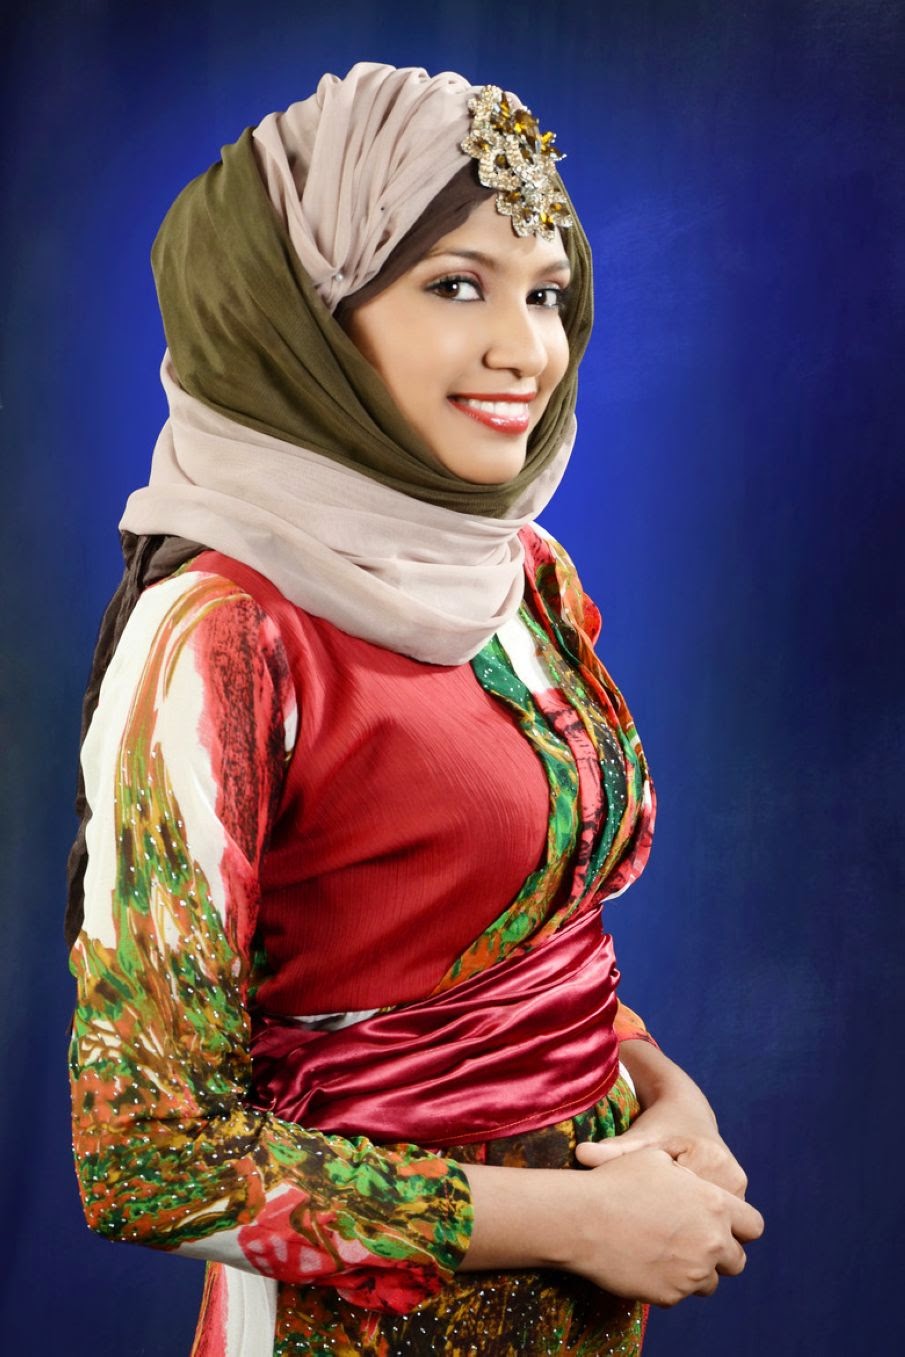 Koleksi Foto Wanita Cantik Dengan Jilbab - Artikel Ilmiah 